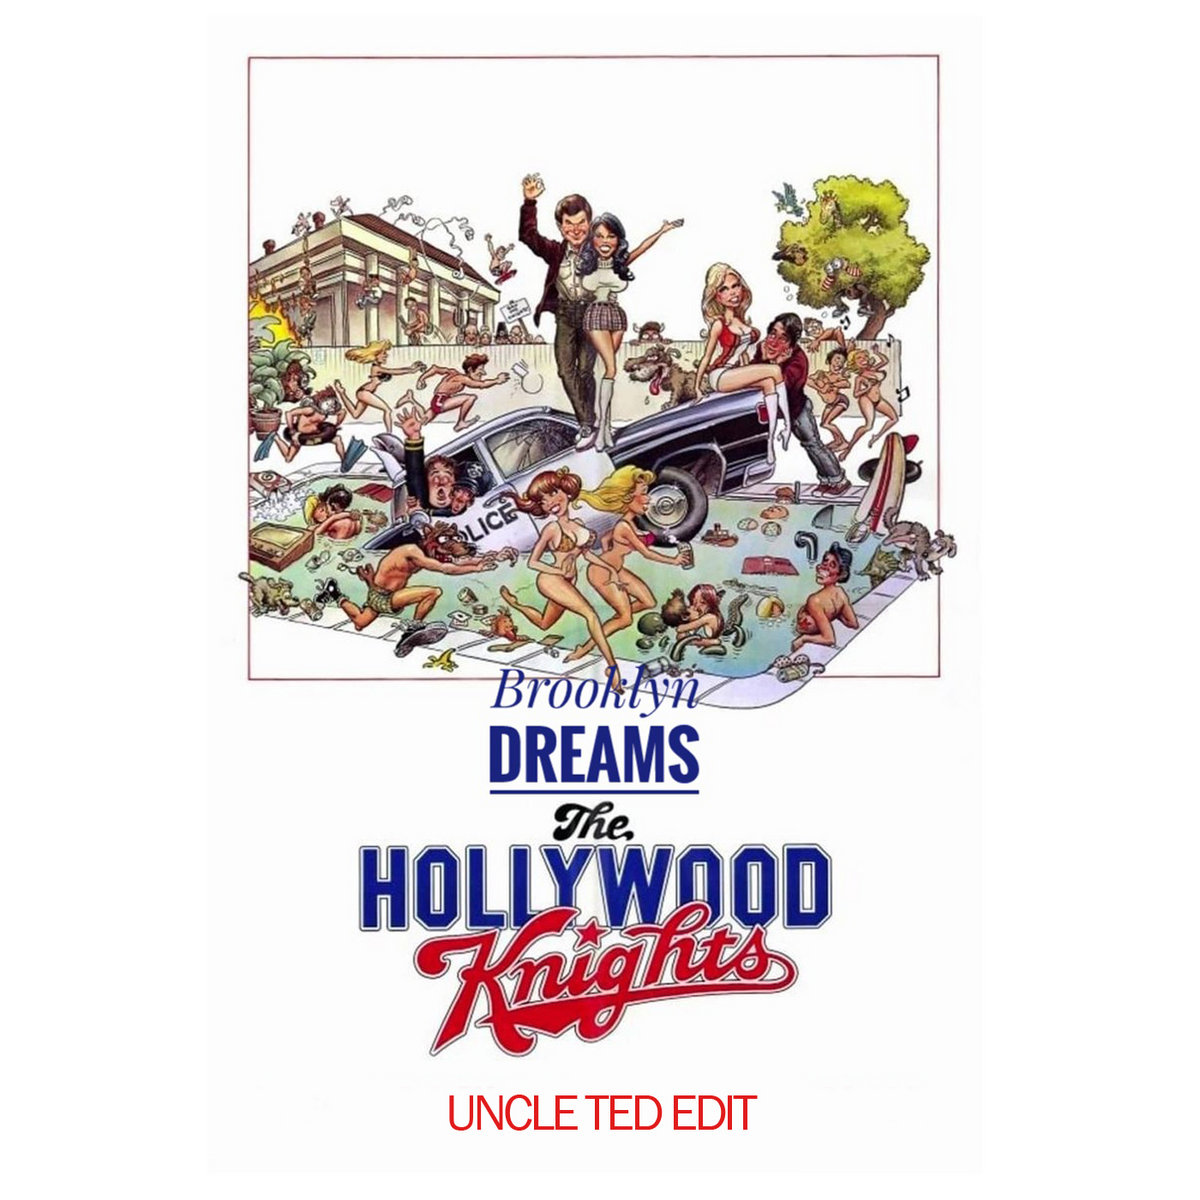 Brooklyn Dreams - Hollywood Knights (Uncle Ted Edit)